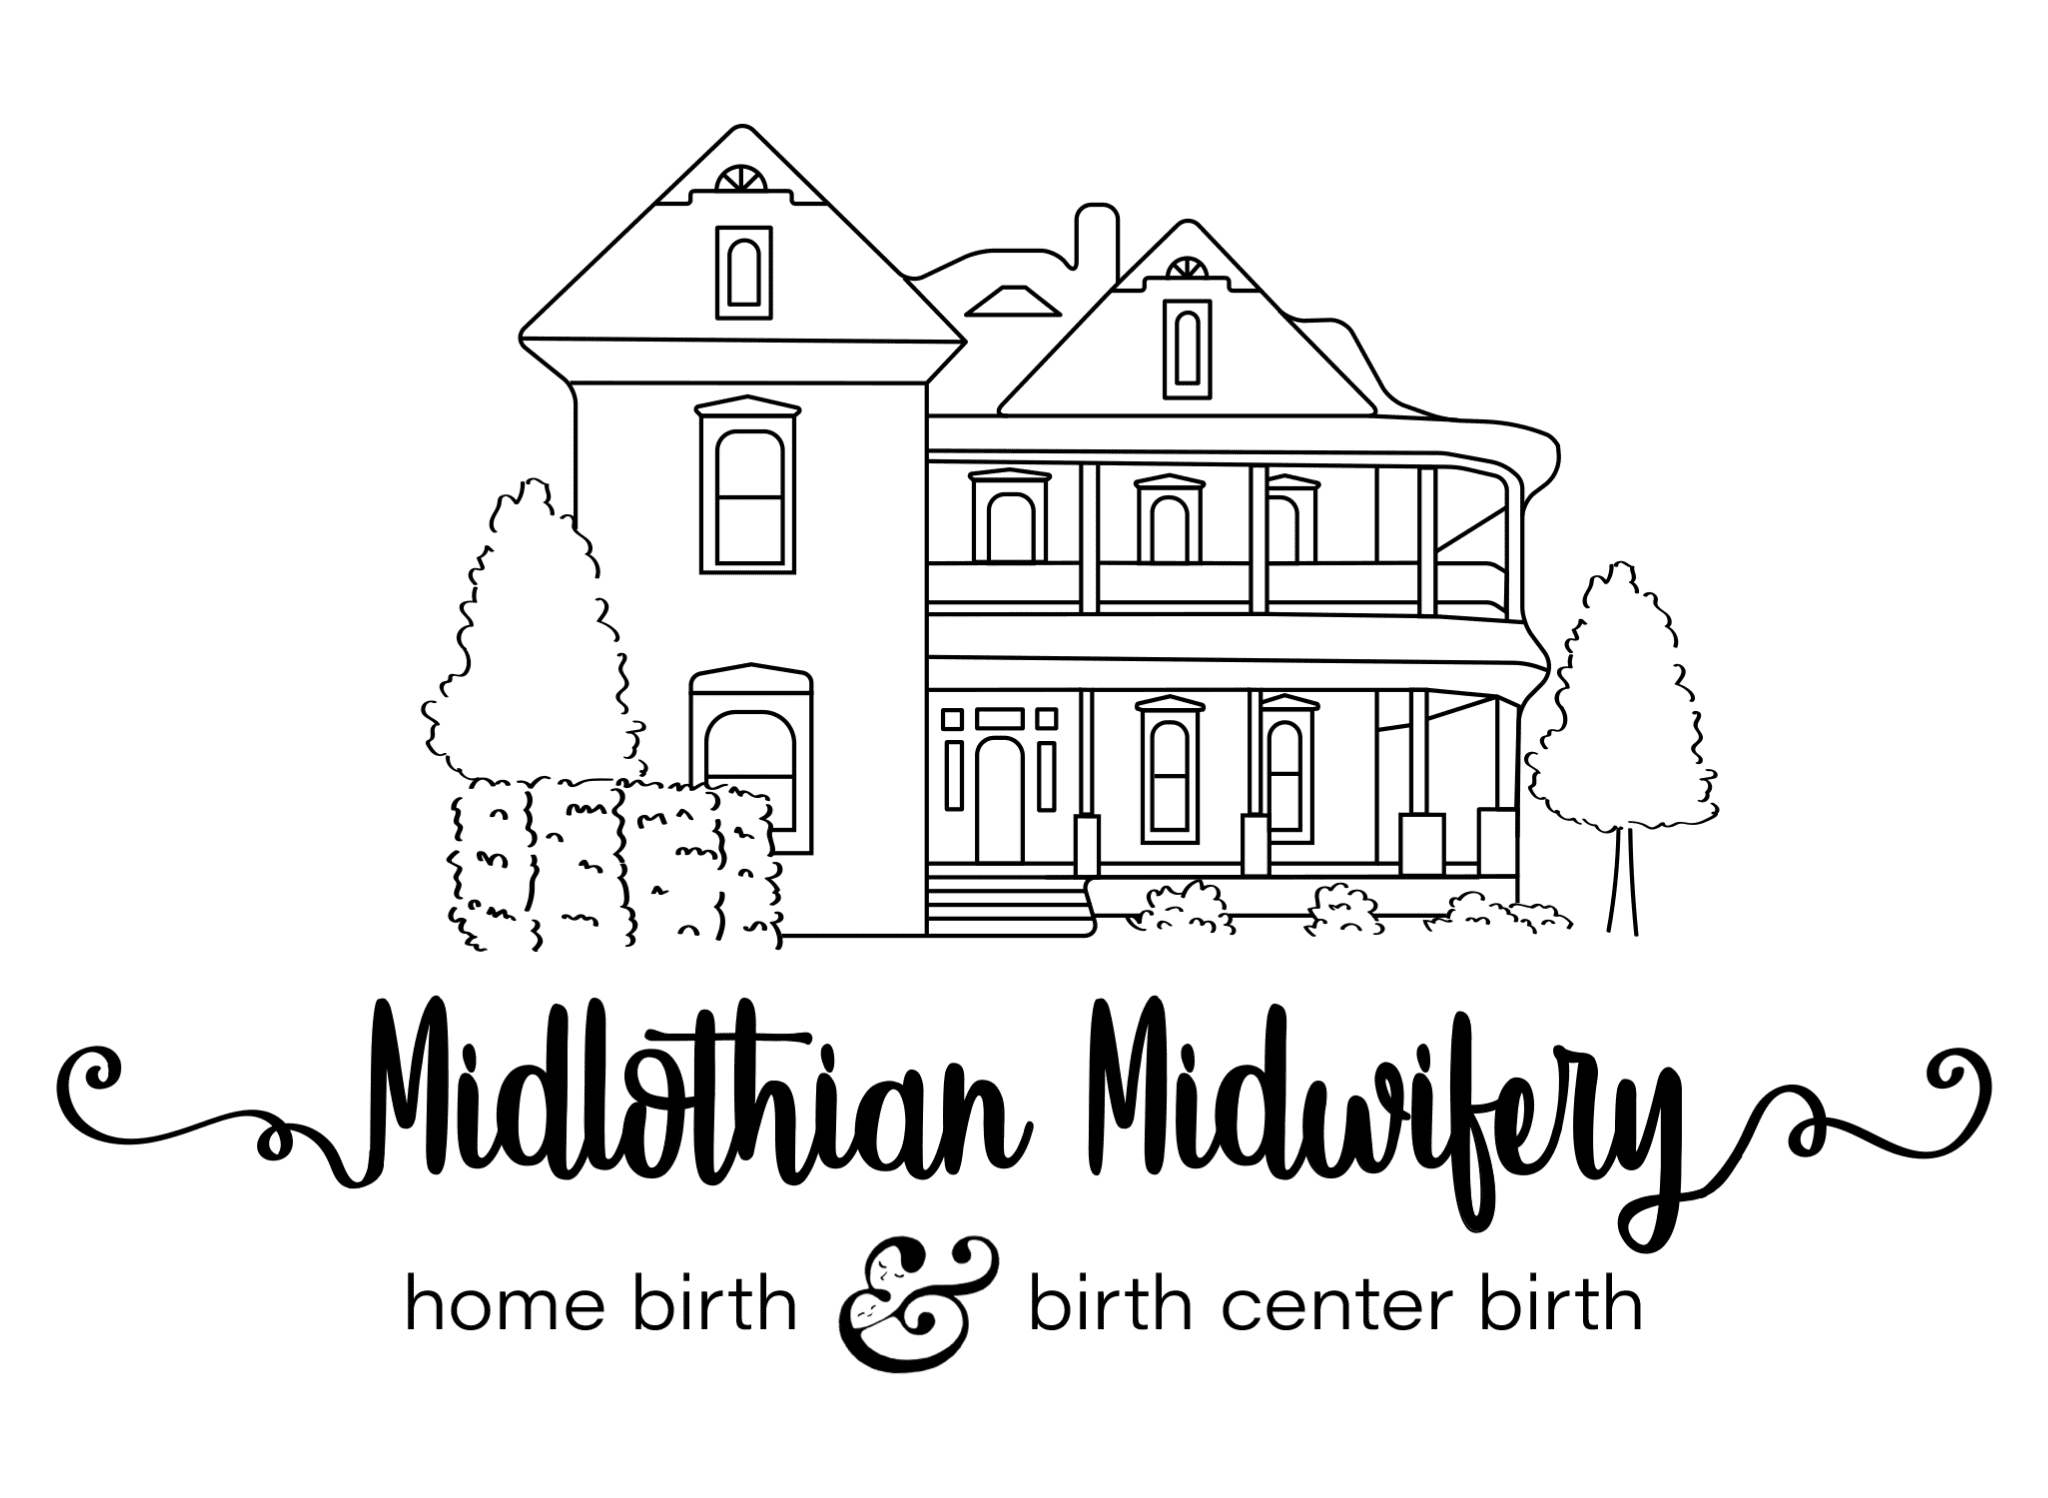 Midlothian Midwifery Home Birth